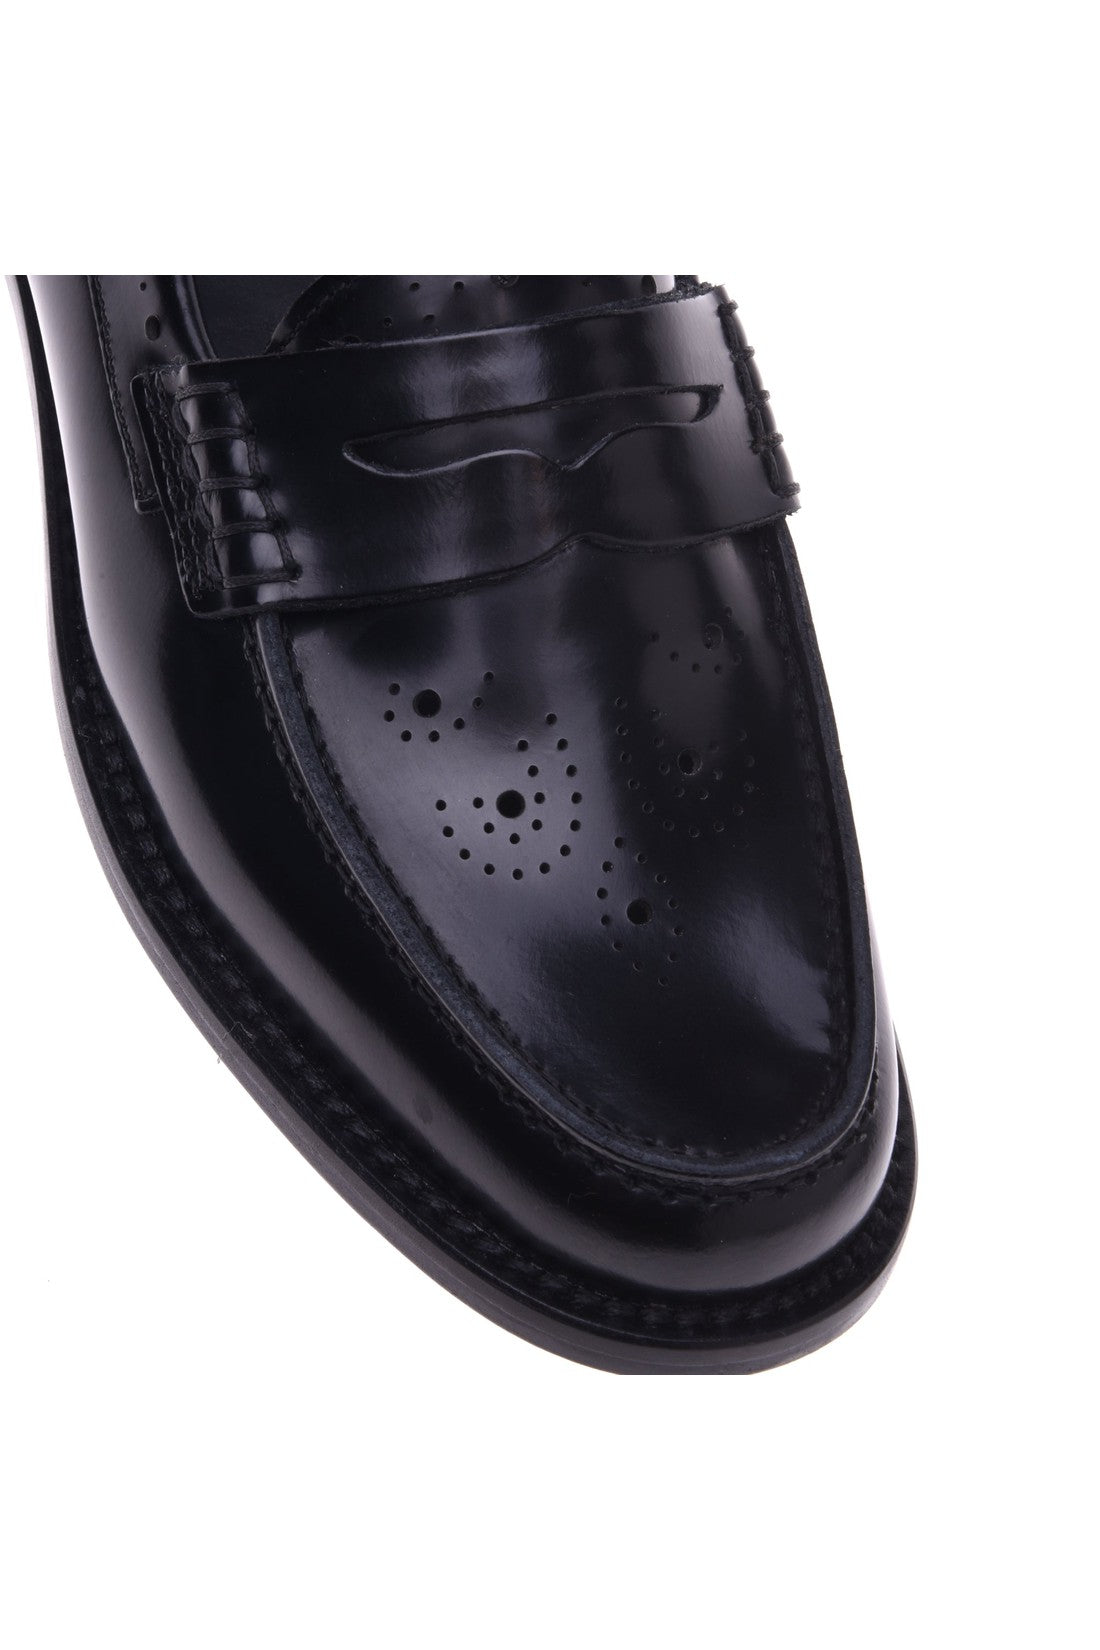 Loafer in black shiny calfskin